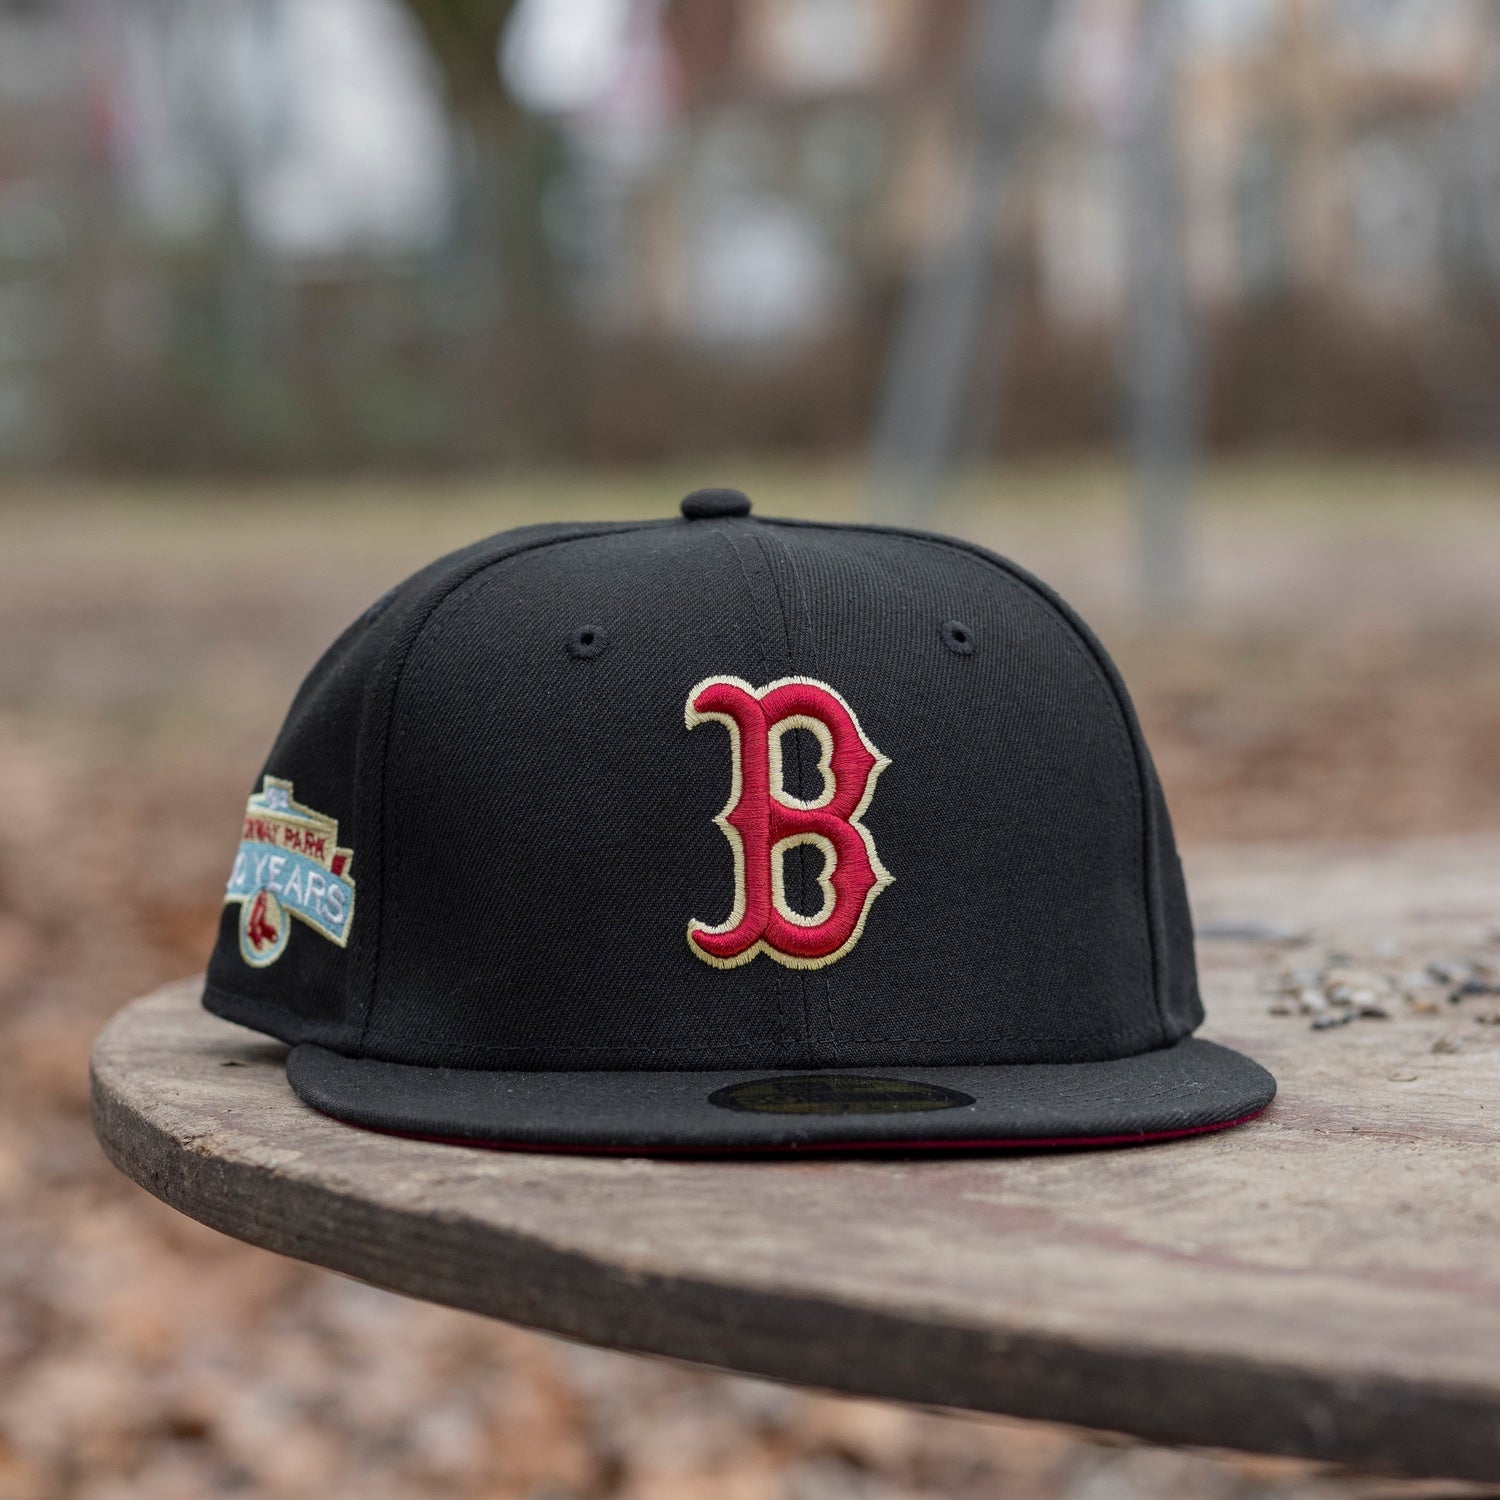 NEW ERA 59FIFTY MLB BOSTON RED SOX FENWAY PARK BLACK / MAROON UV FITTED CAP